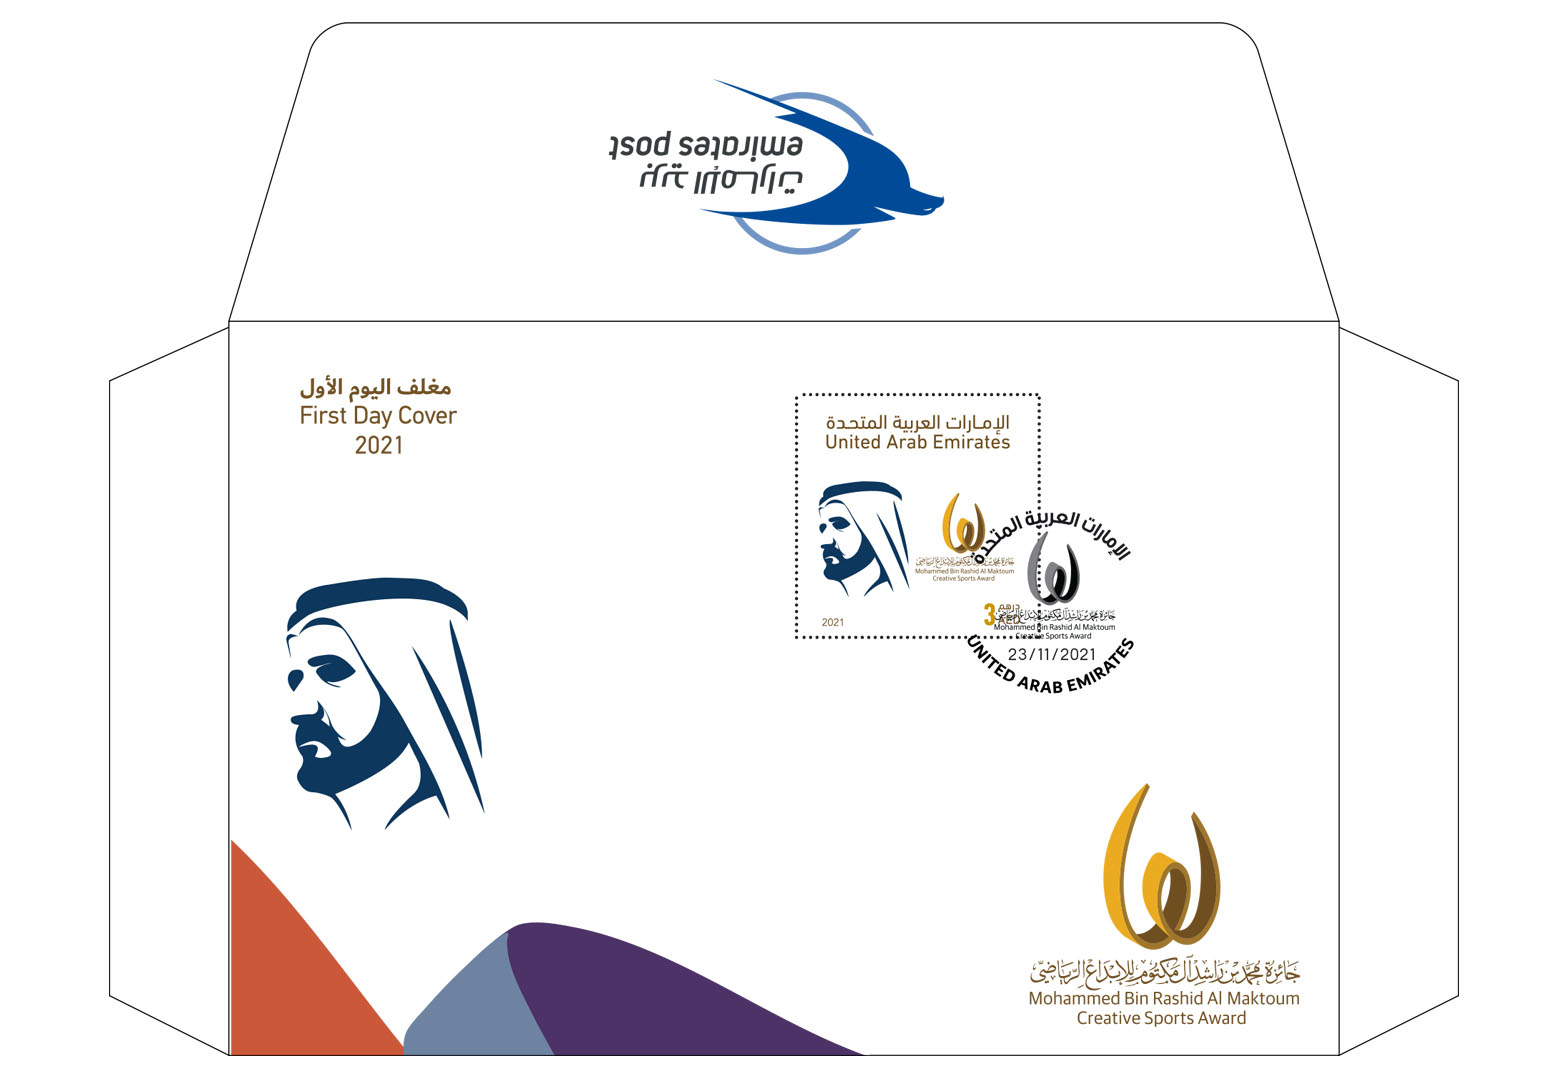 Mohammed Bin Rashid Al Maktoum Creative Sports Award First Day Cover